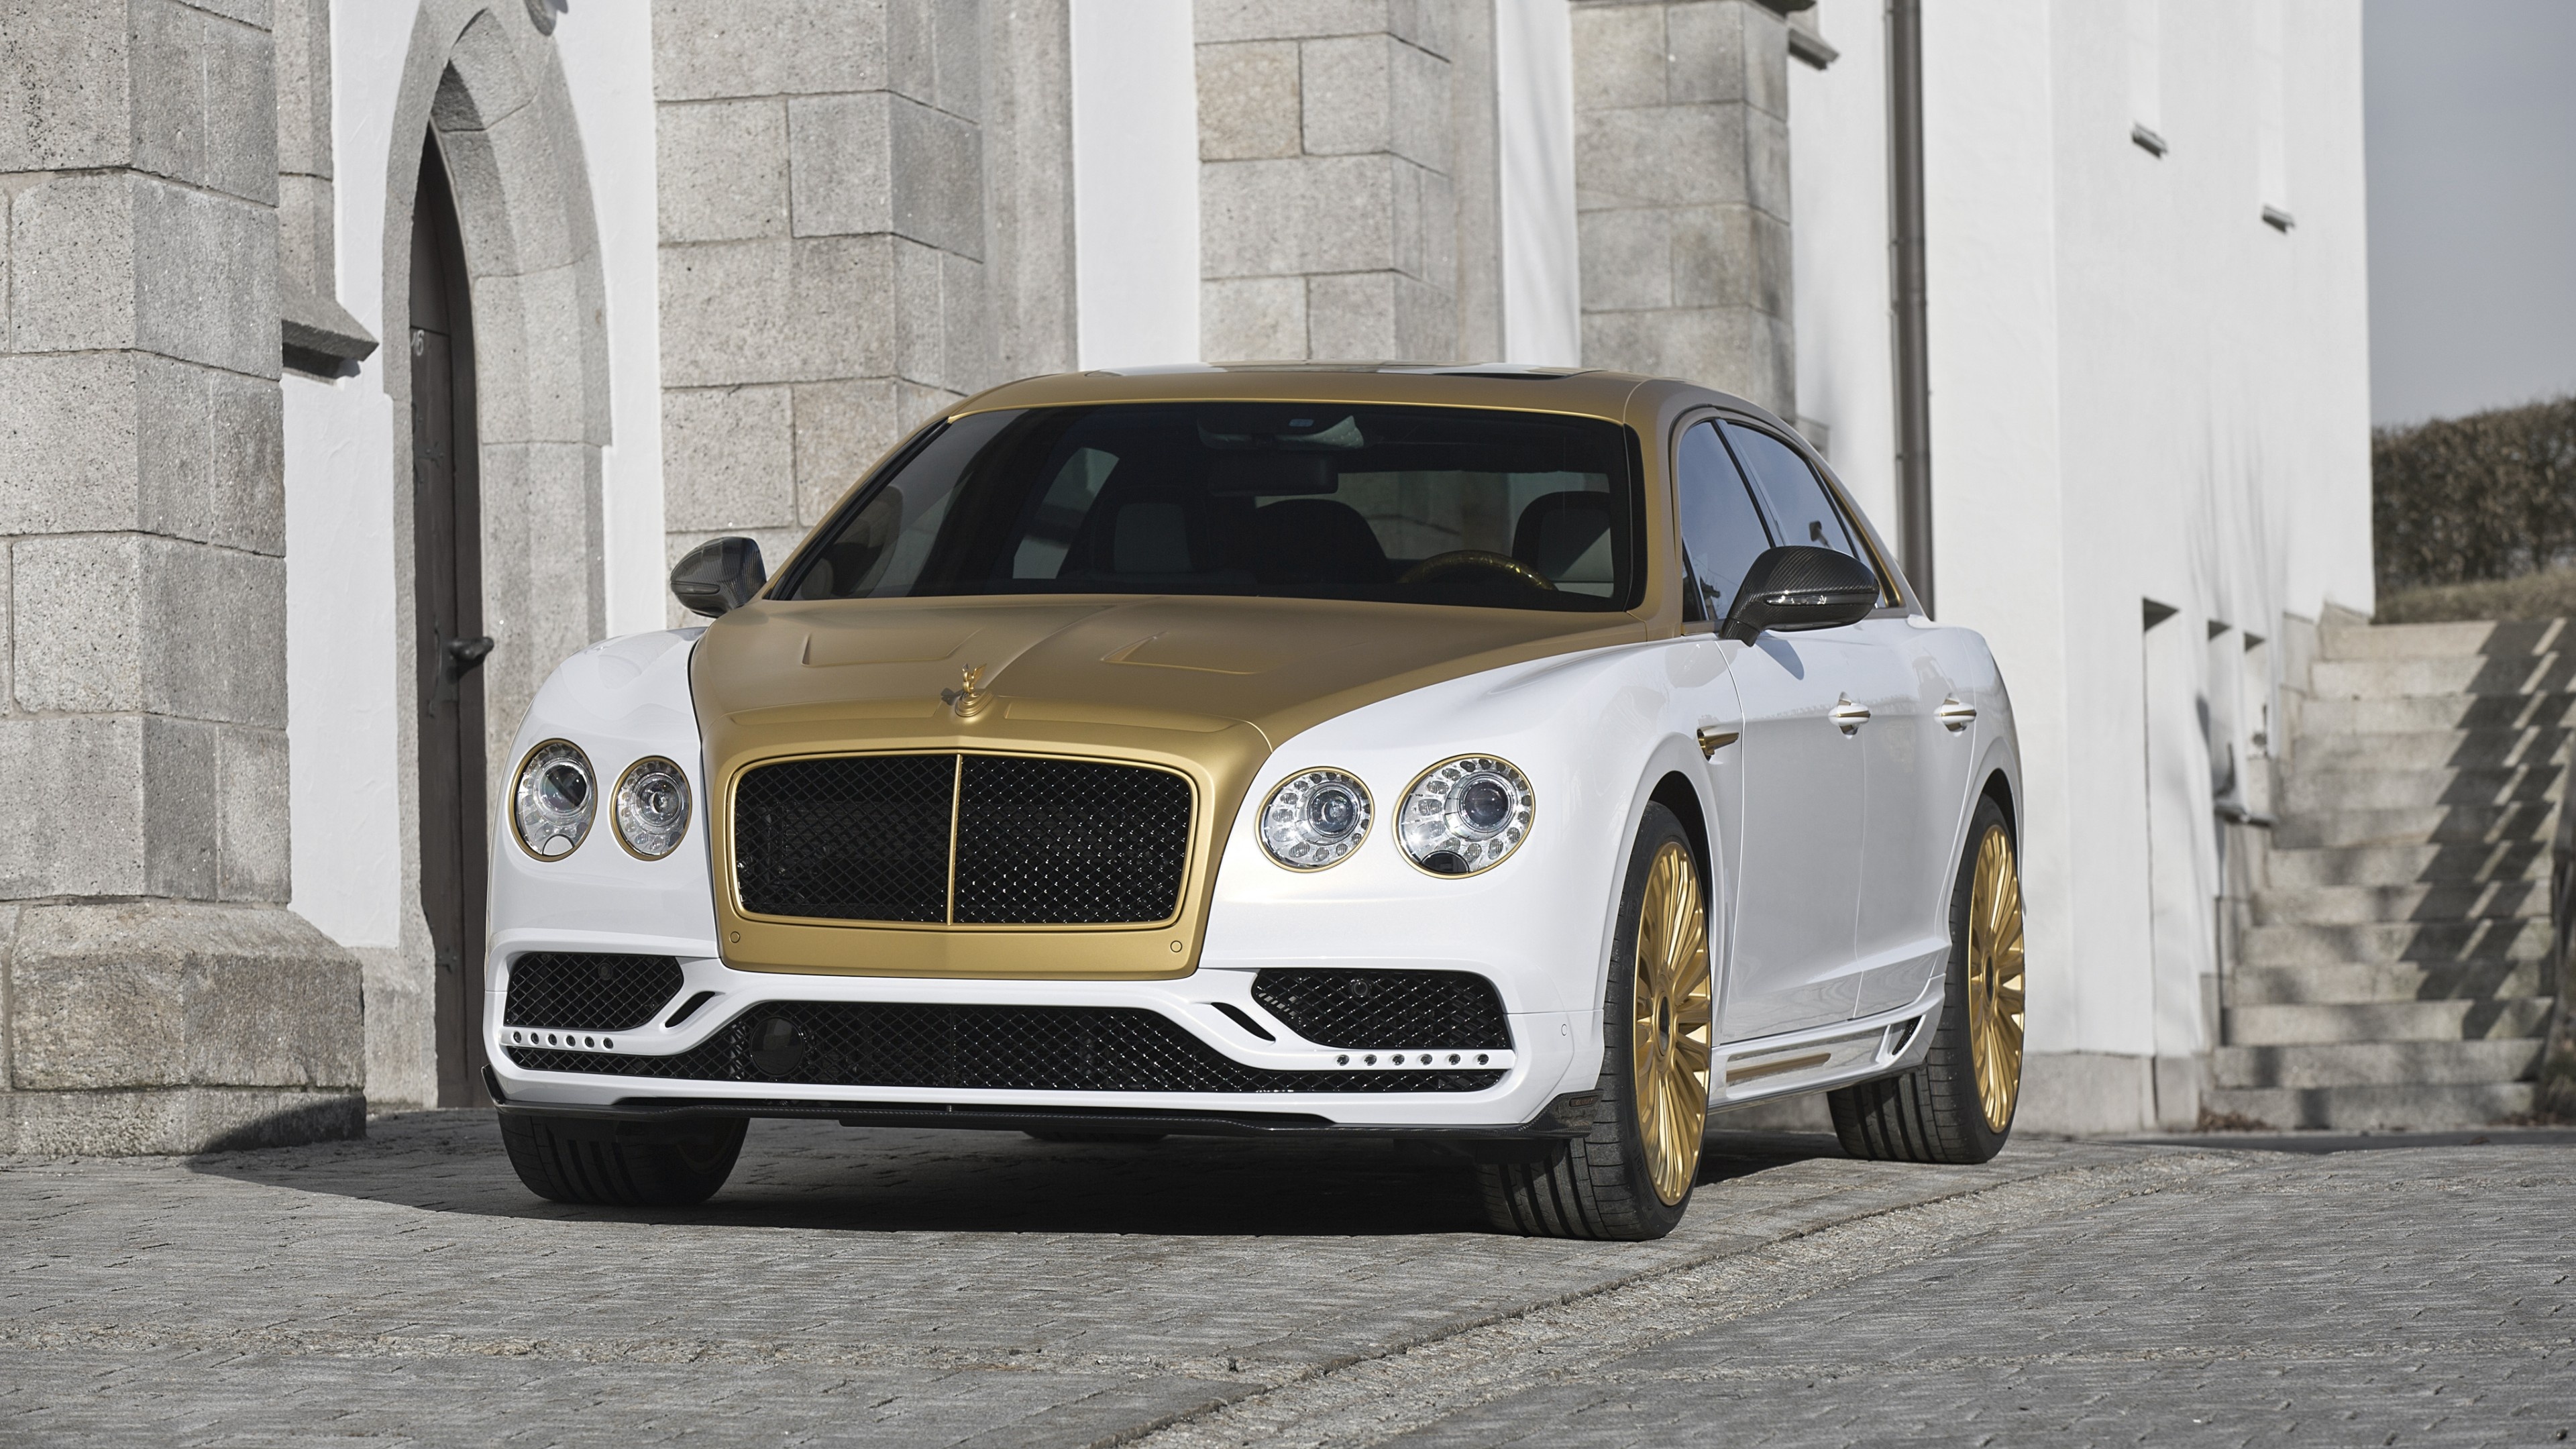 Bentley Flying Spur, Mansory modification, Geneva Auto Show, Luxury car showcase, 3840x2160 4K Desktop